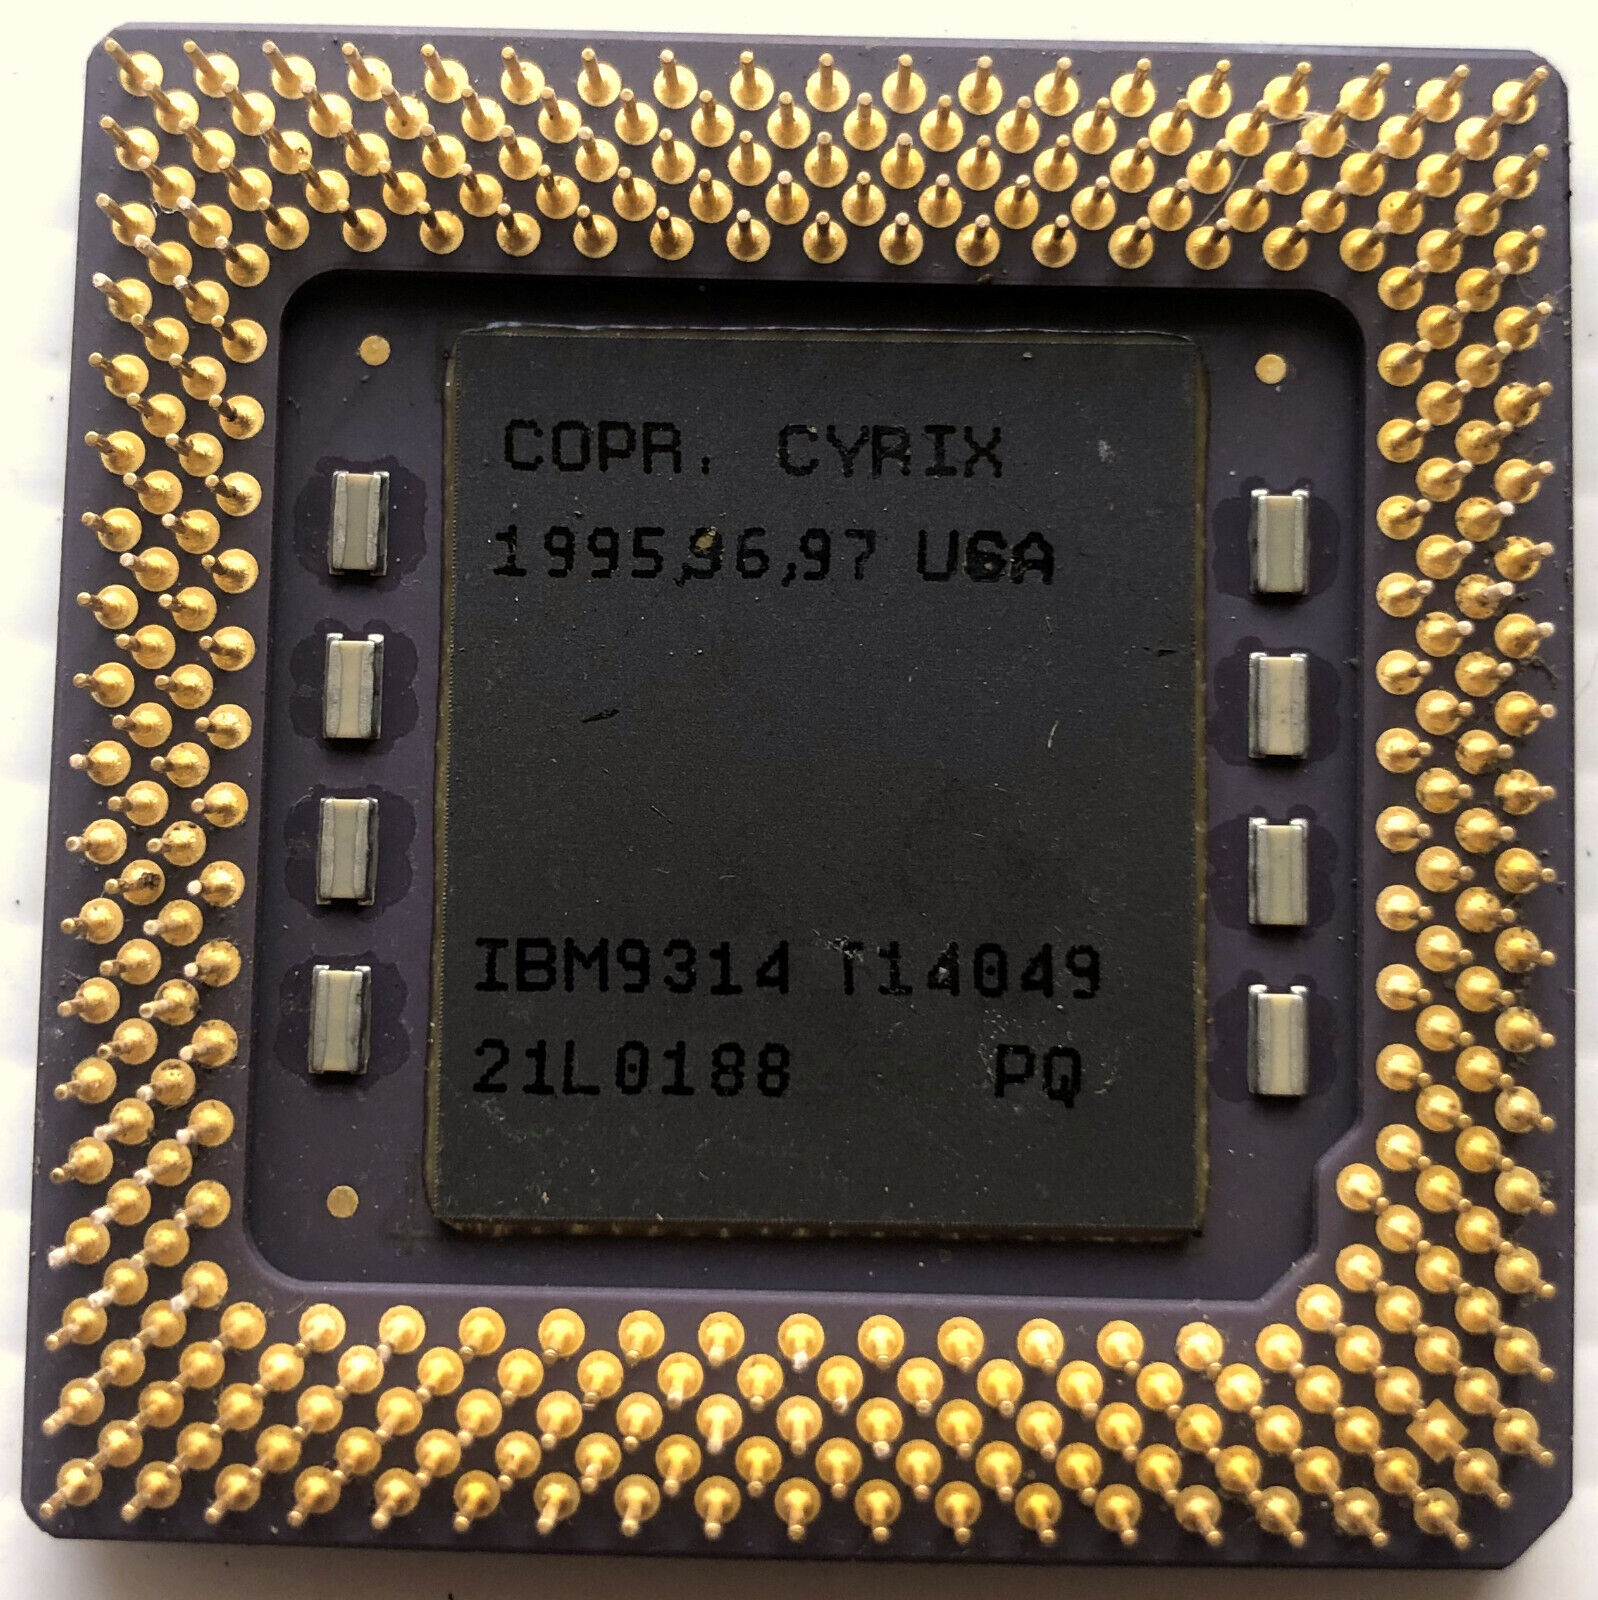 IBM 6x86MX PR233 75Mhz Socket 7 CPU Gold Top IM26x86MX-8VAPR233GE 2.9V CORE